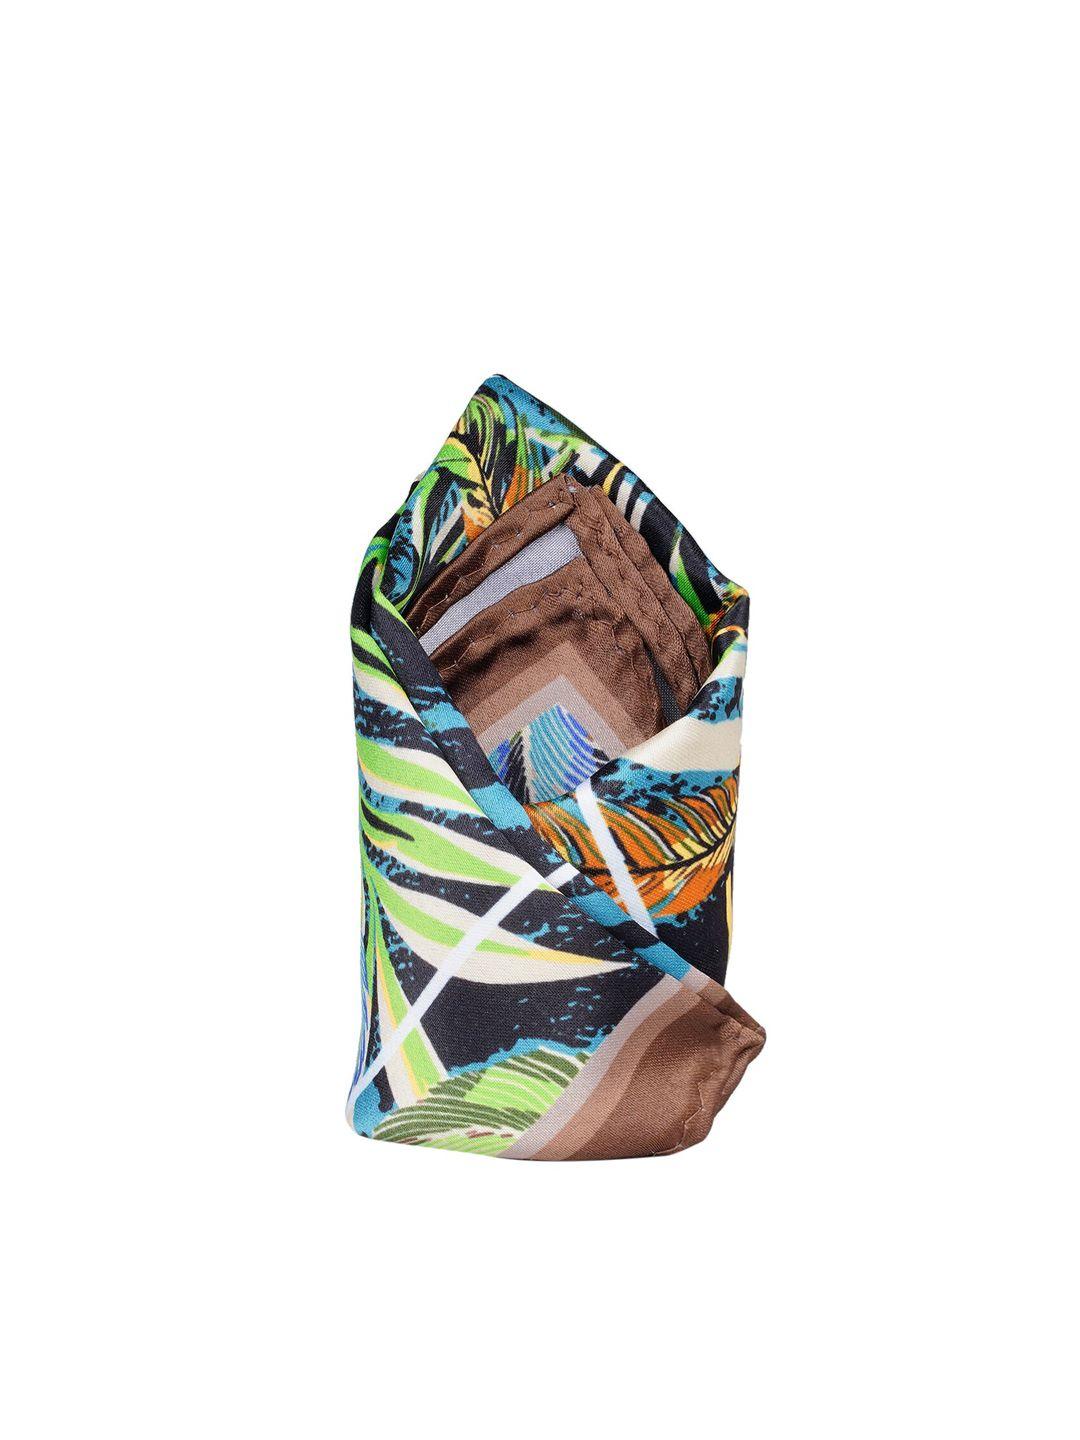 tossido multicoloured tropical printed pocket square